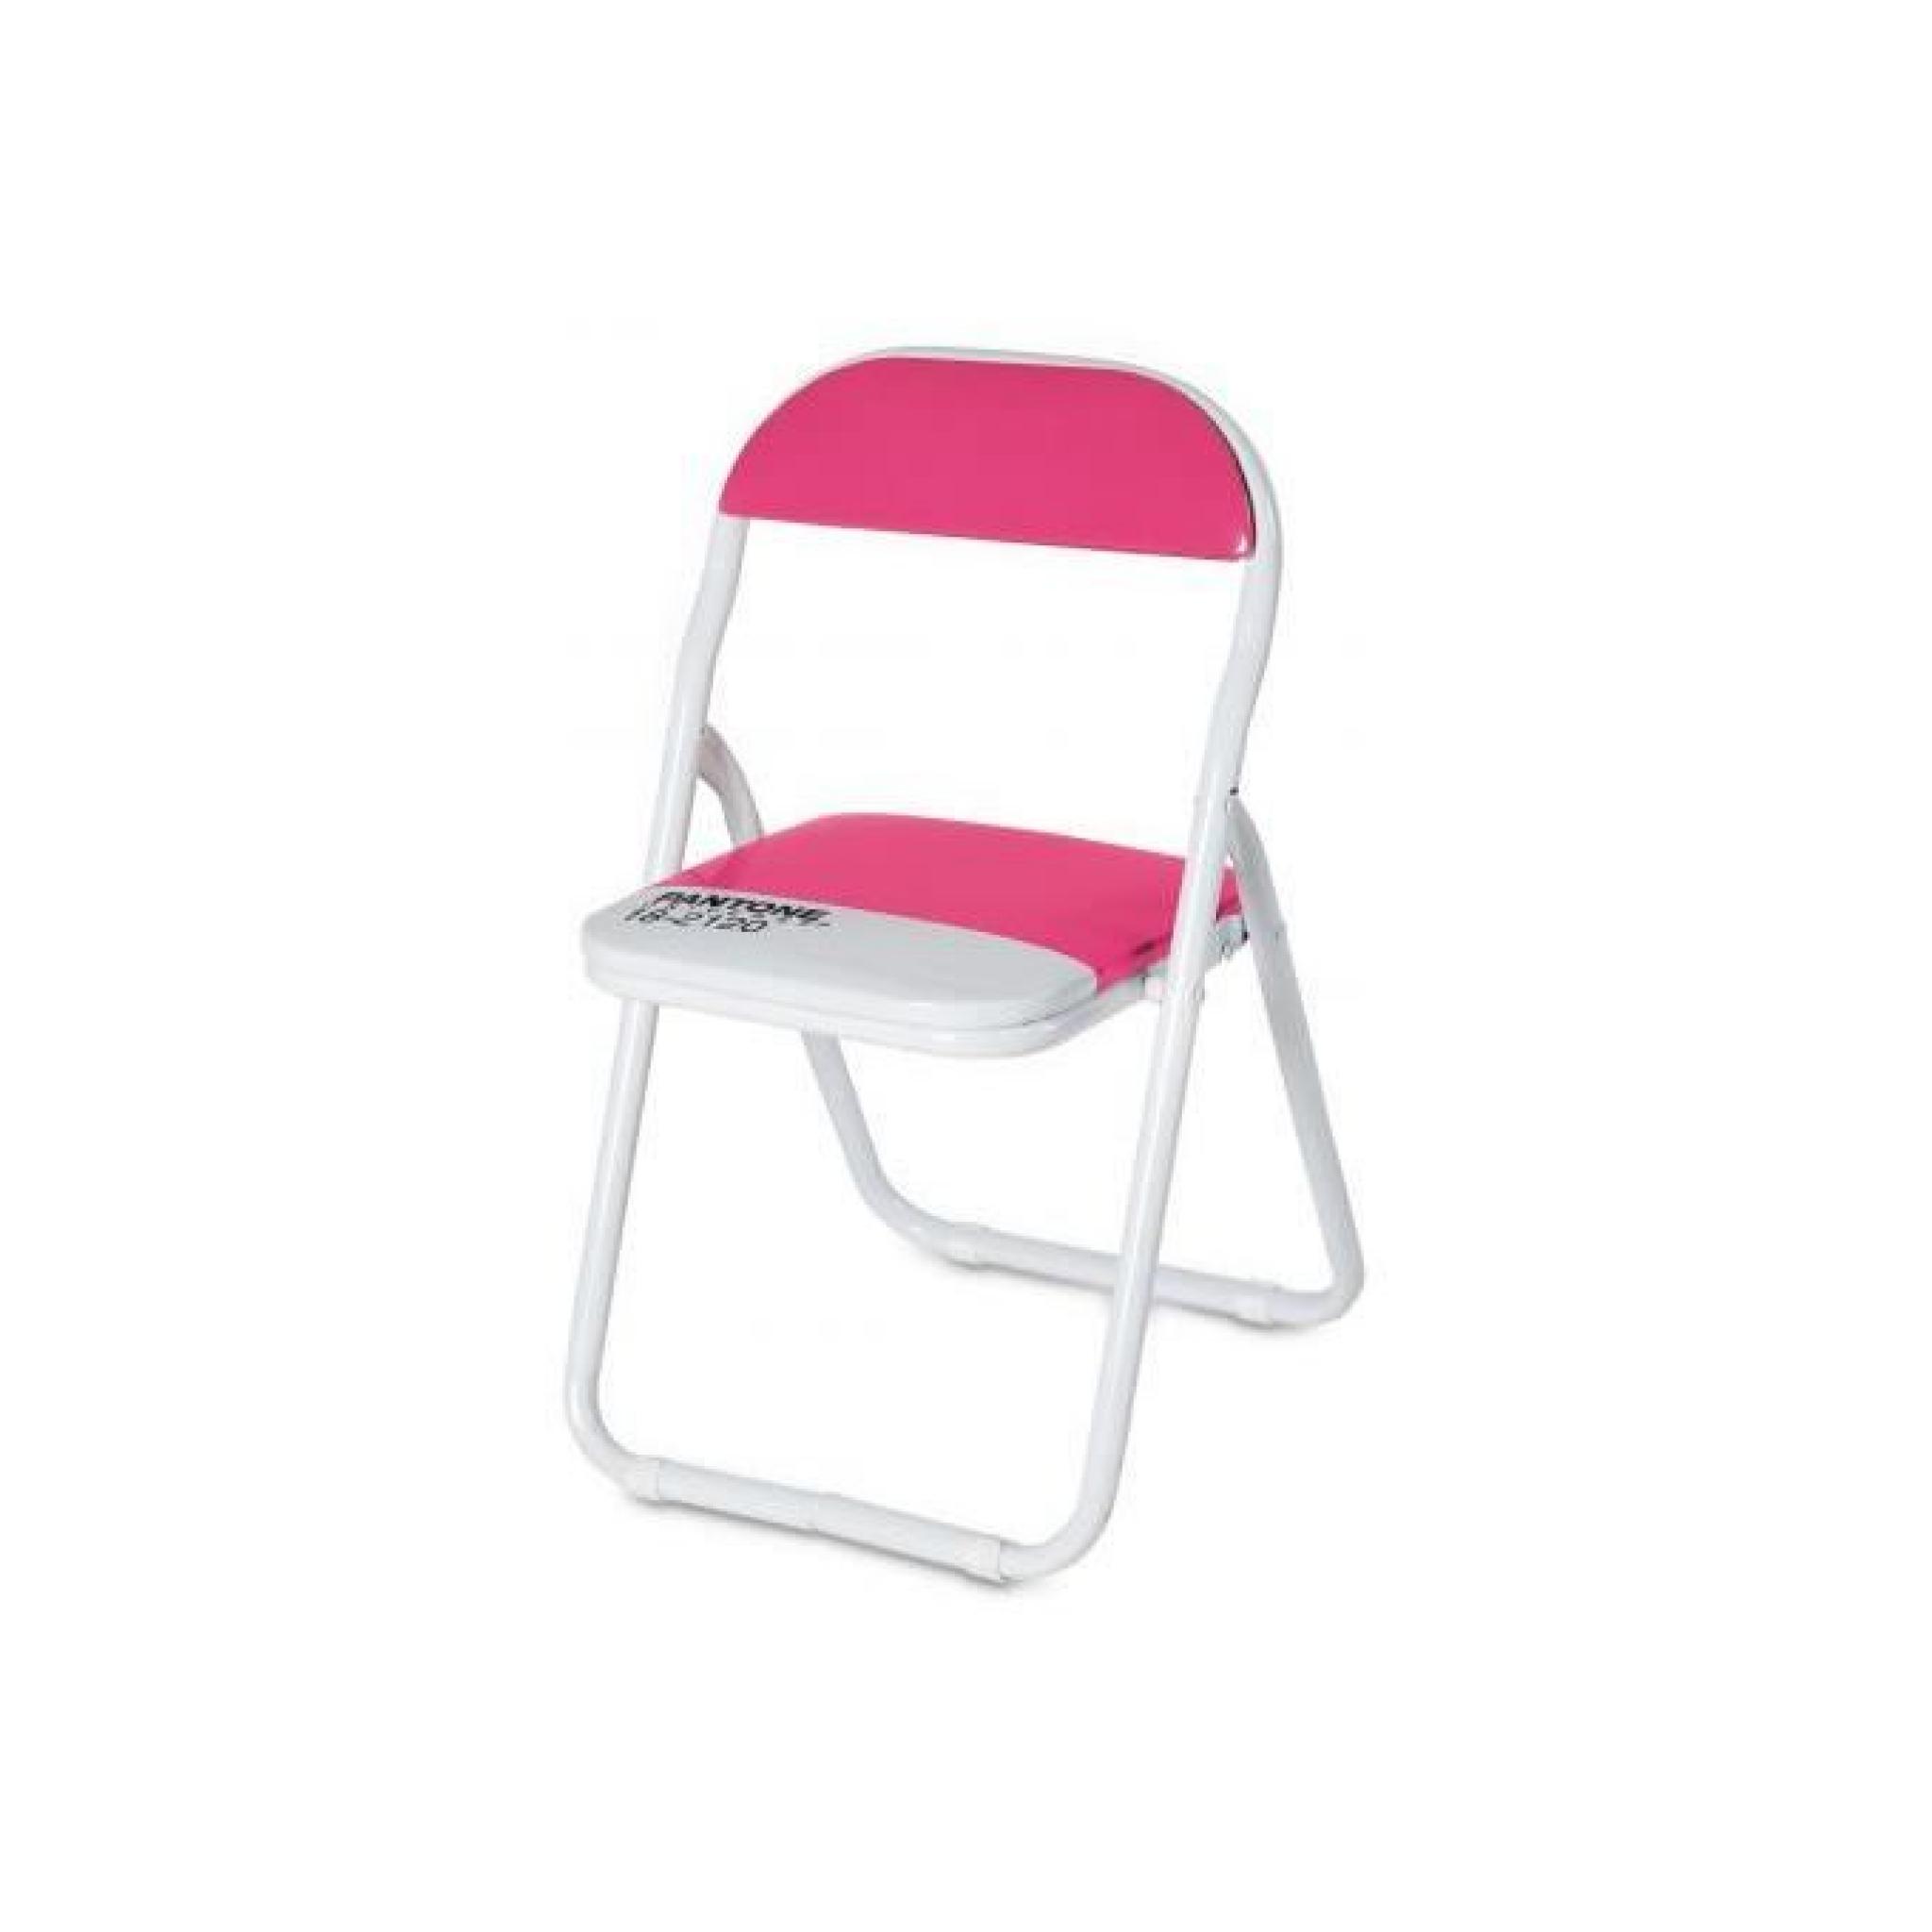 Petite chaise pliante Pantone rose Firenze Seletti